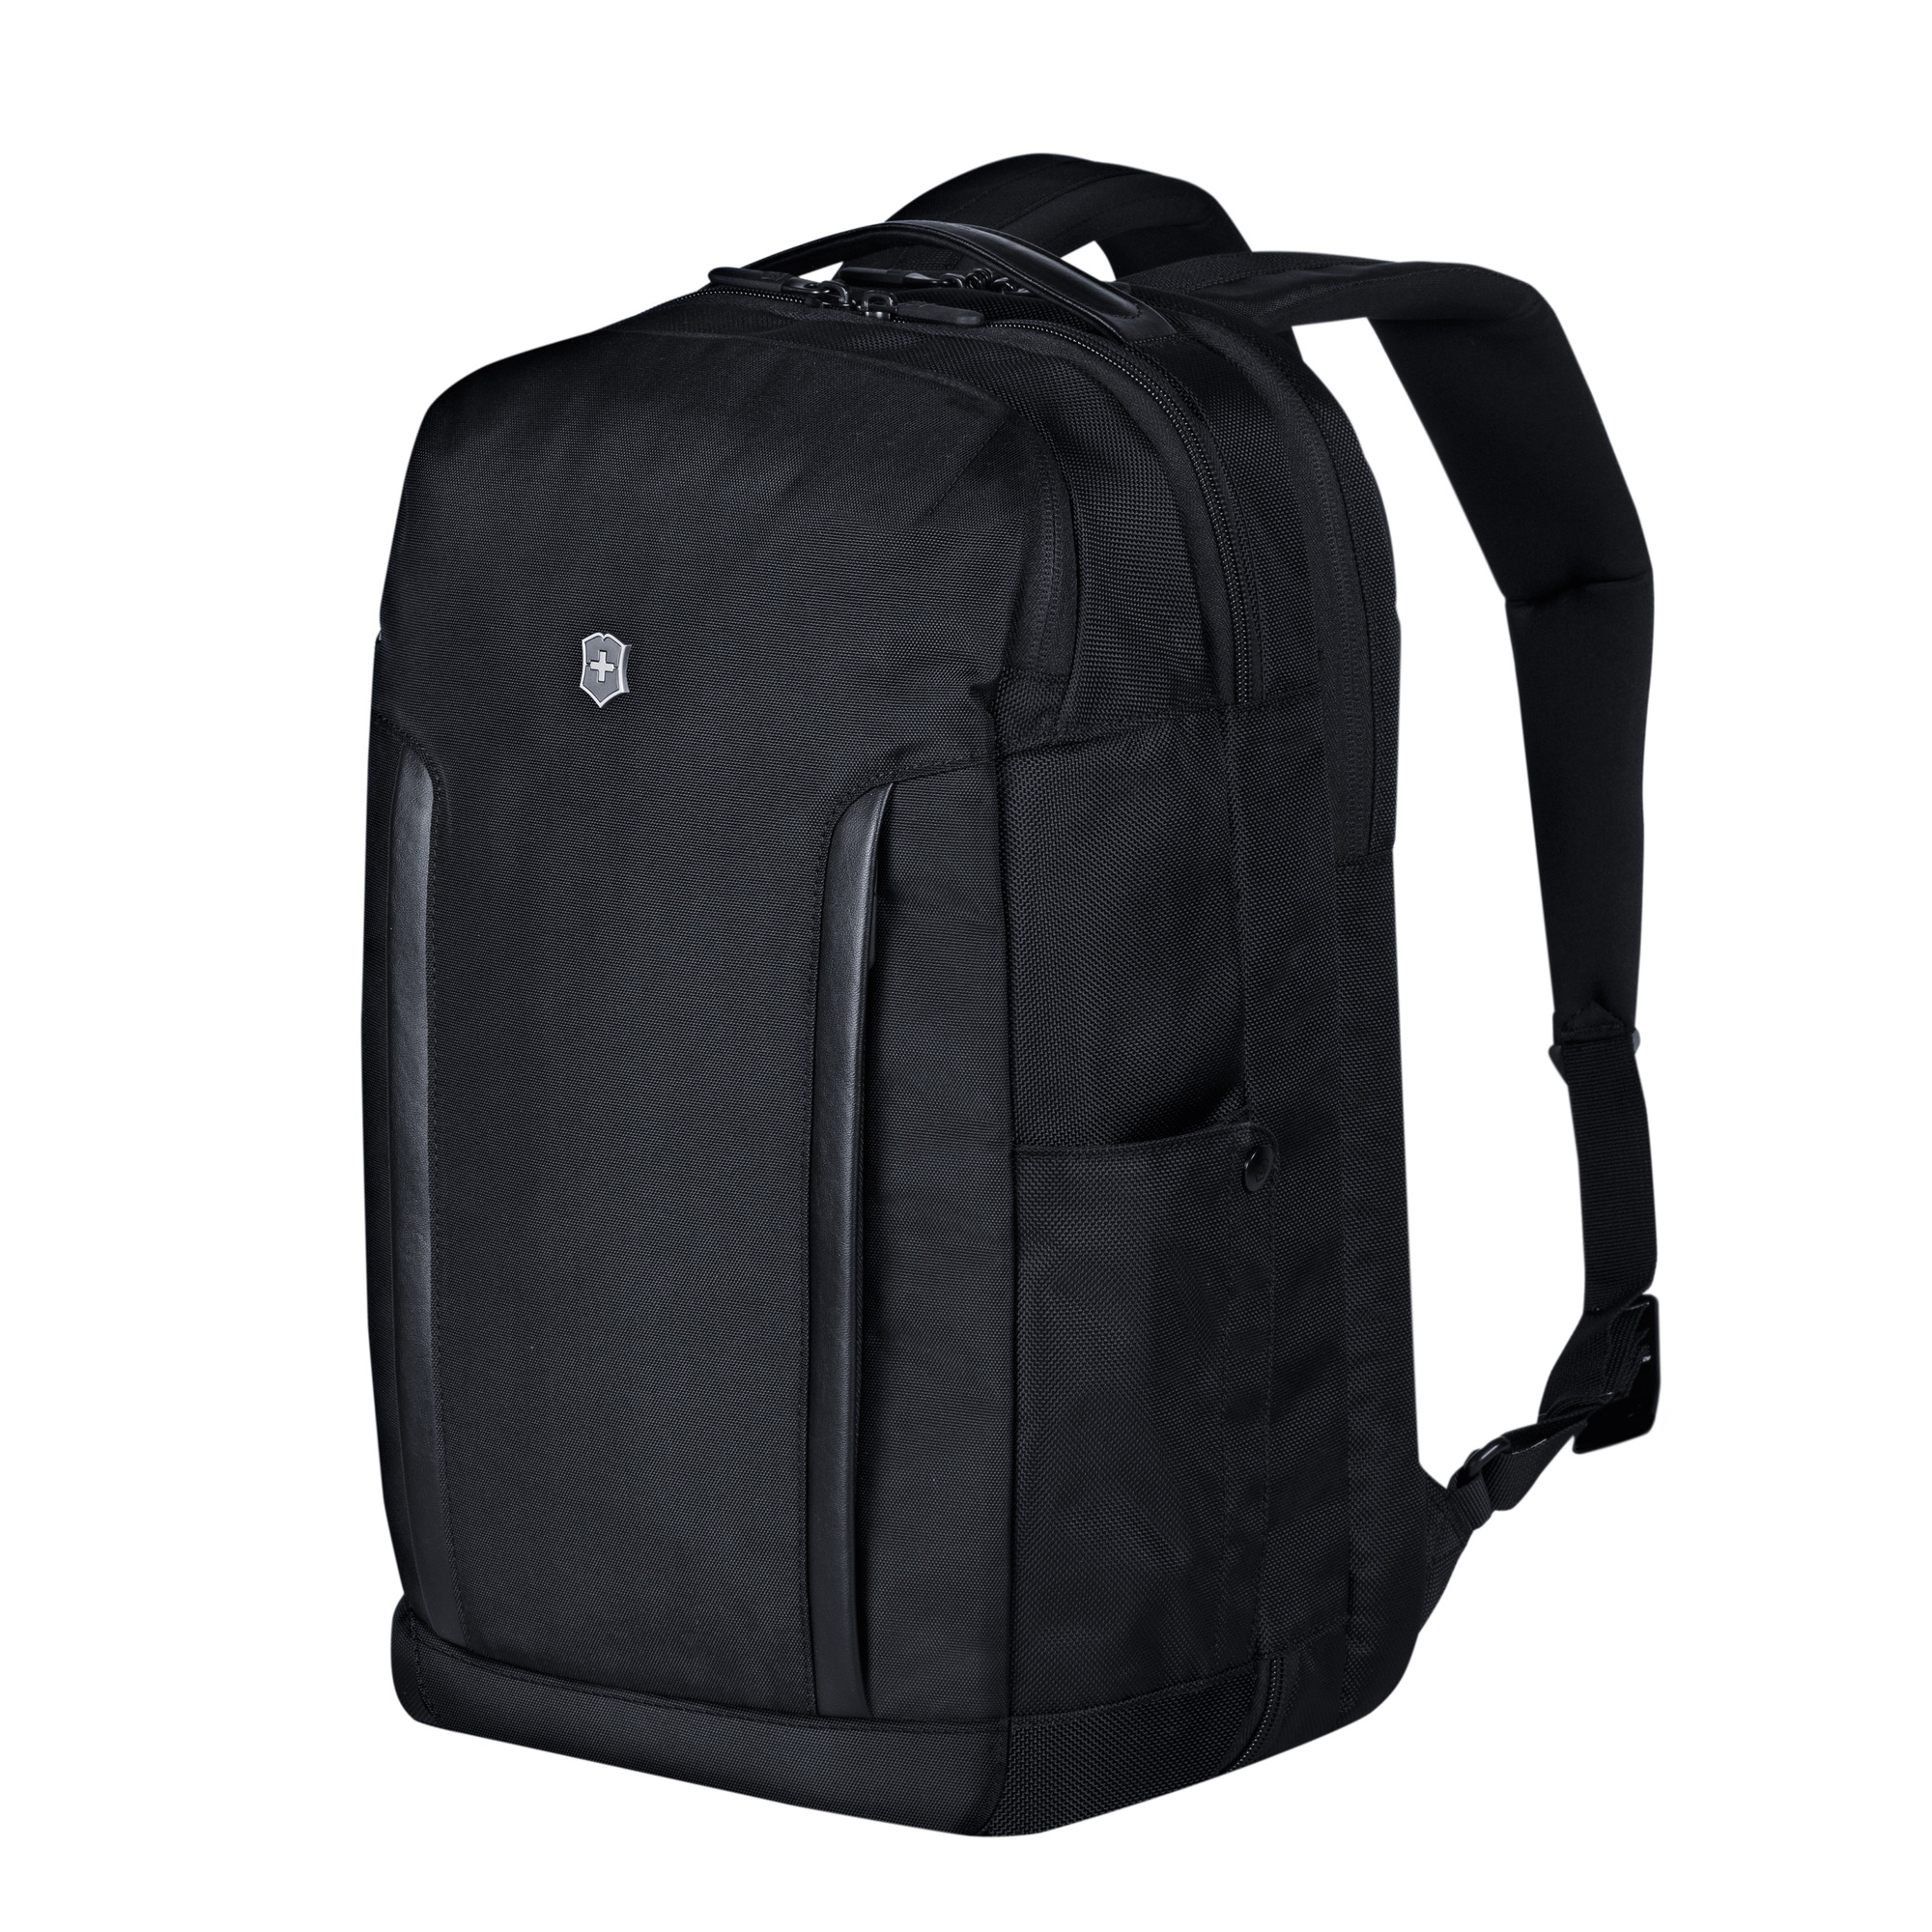 Altmont Professional Deluxe Travel Laptop Backpack, Black - Brandloom